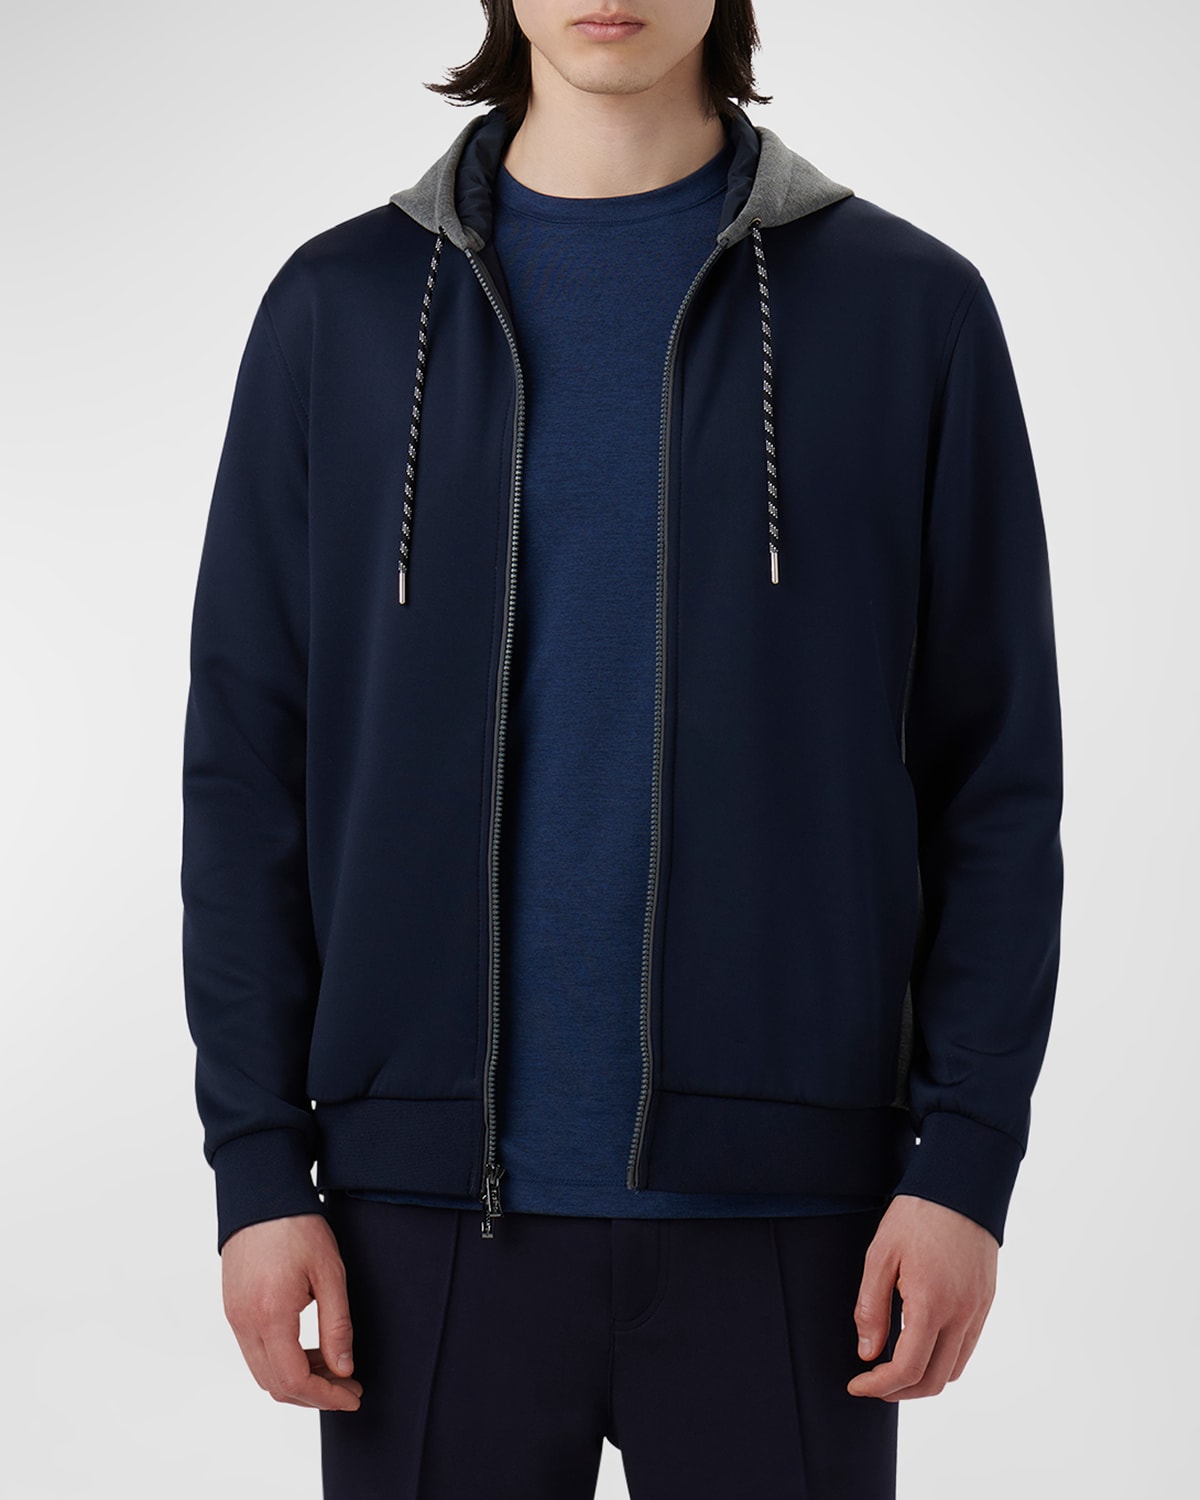 Men's Soft Touch Full-Zip Hooded Jacket